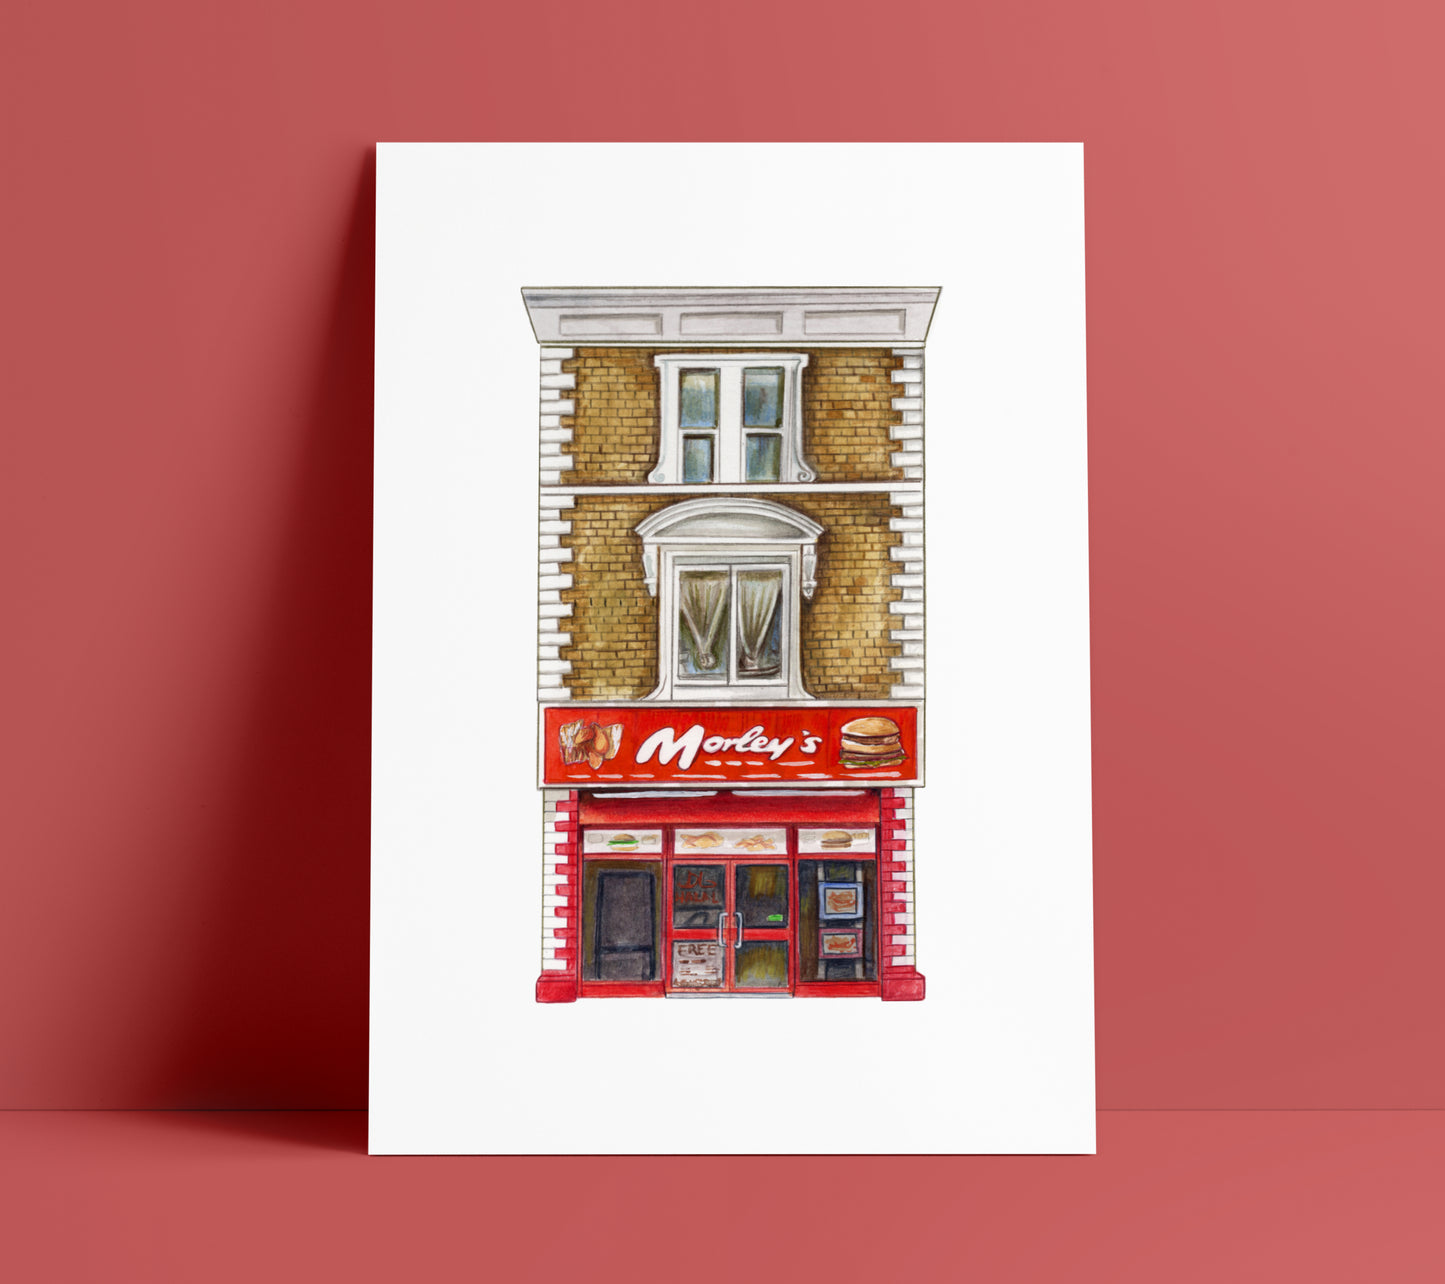 Morley's Chicken Shop, Art Print, Camberwell South London